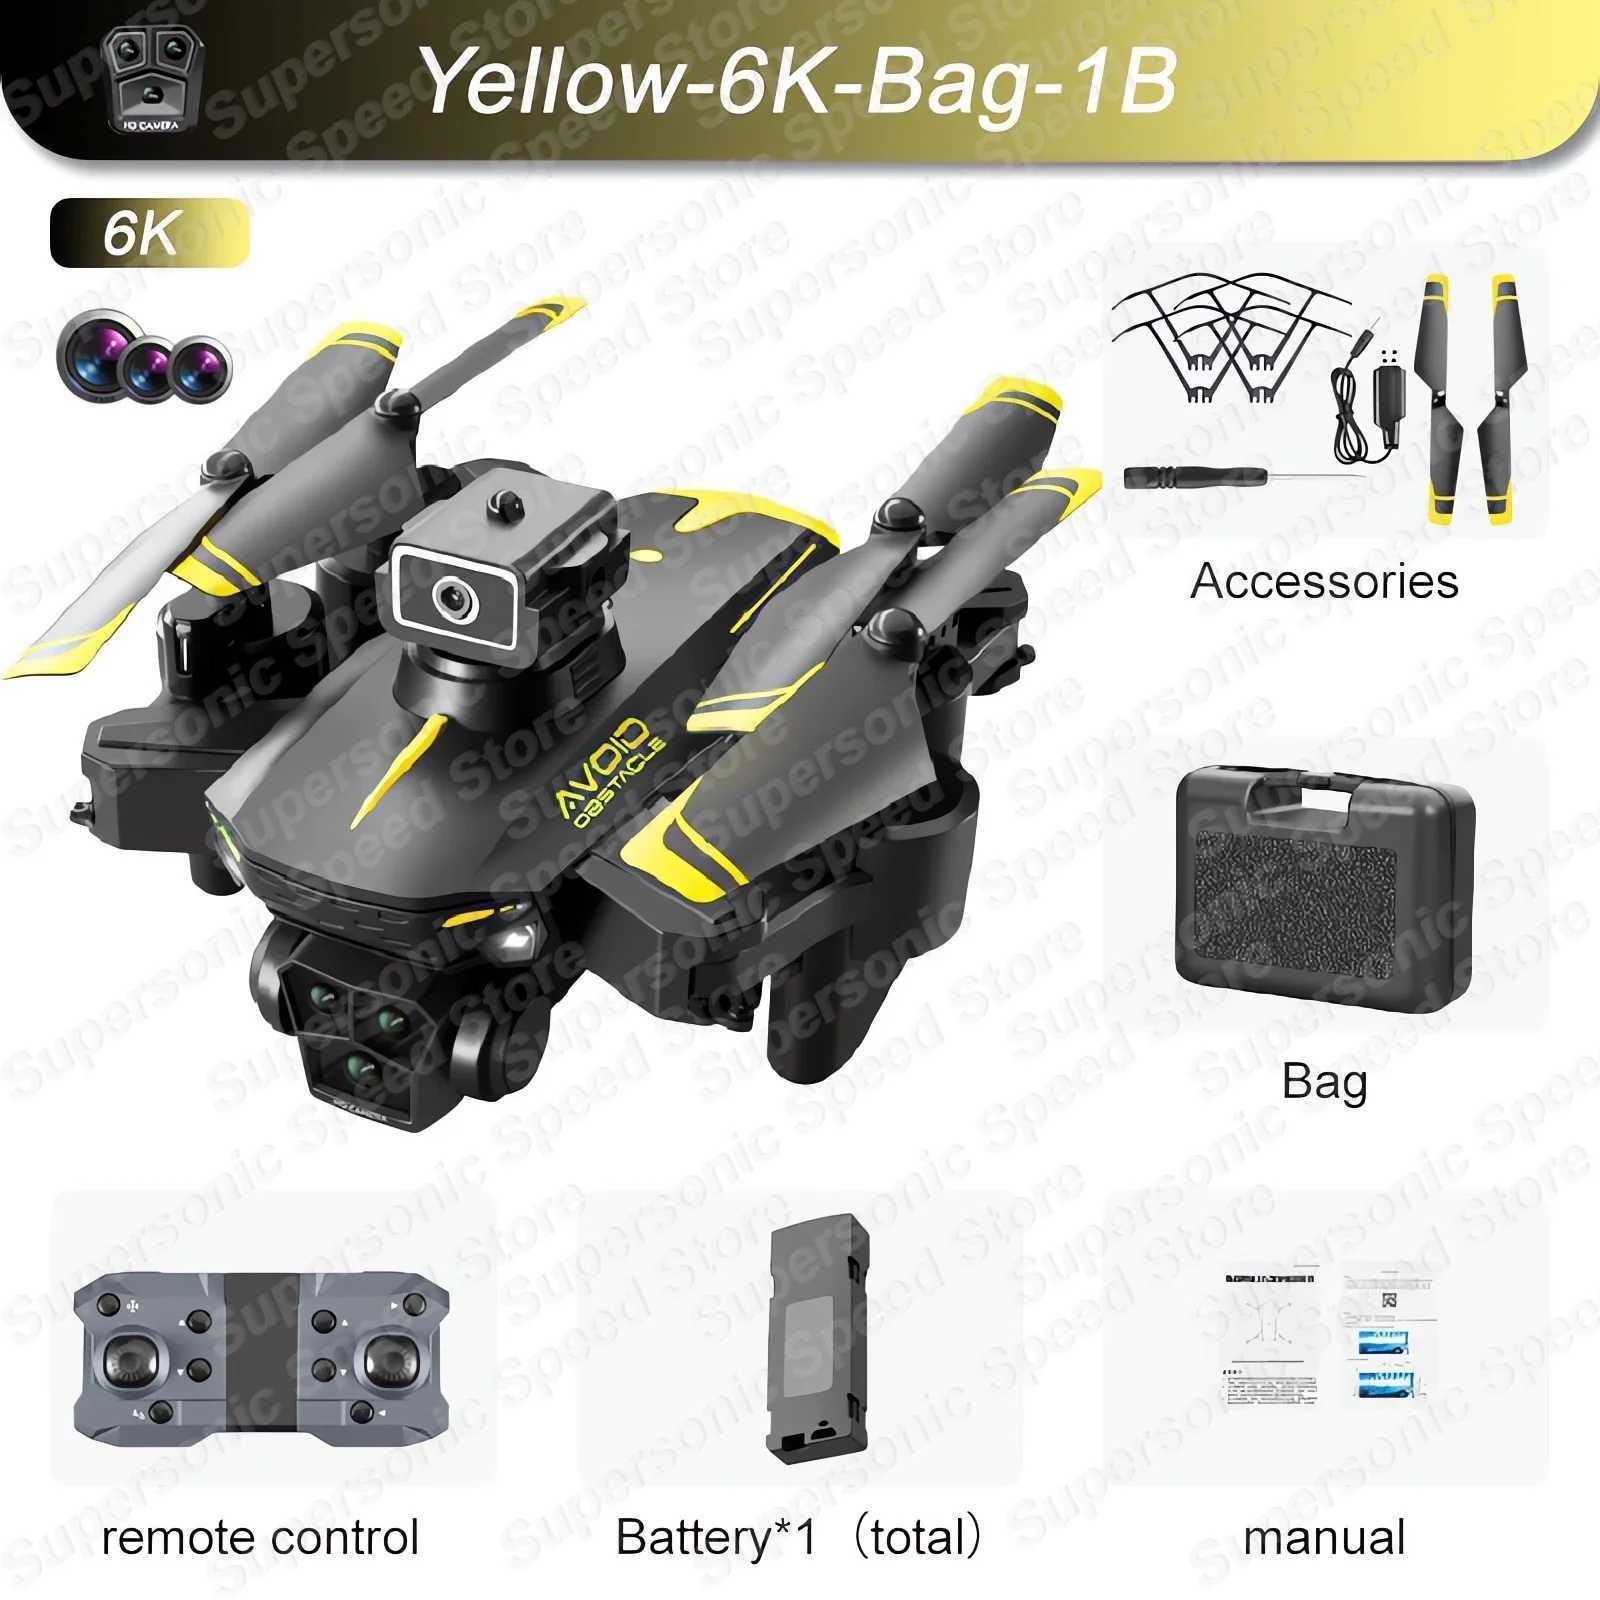 Yellow-6k-bag-1b